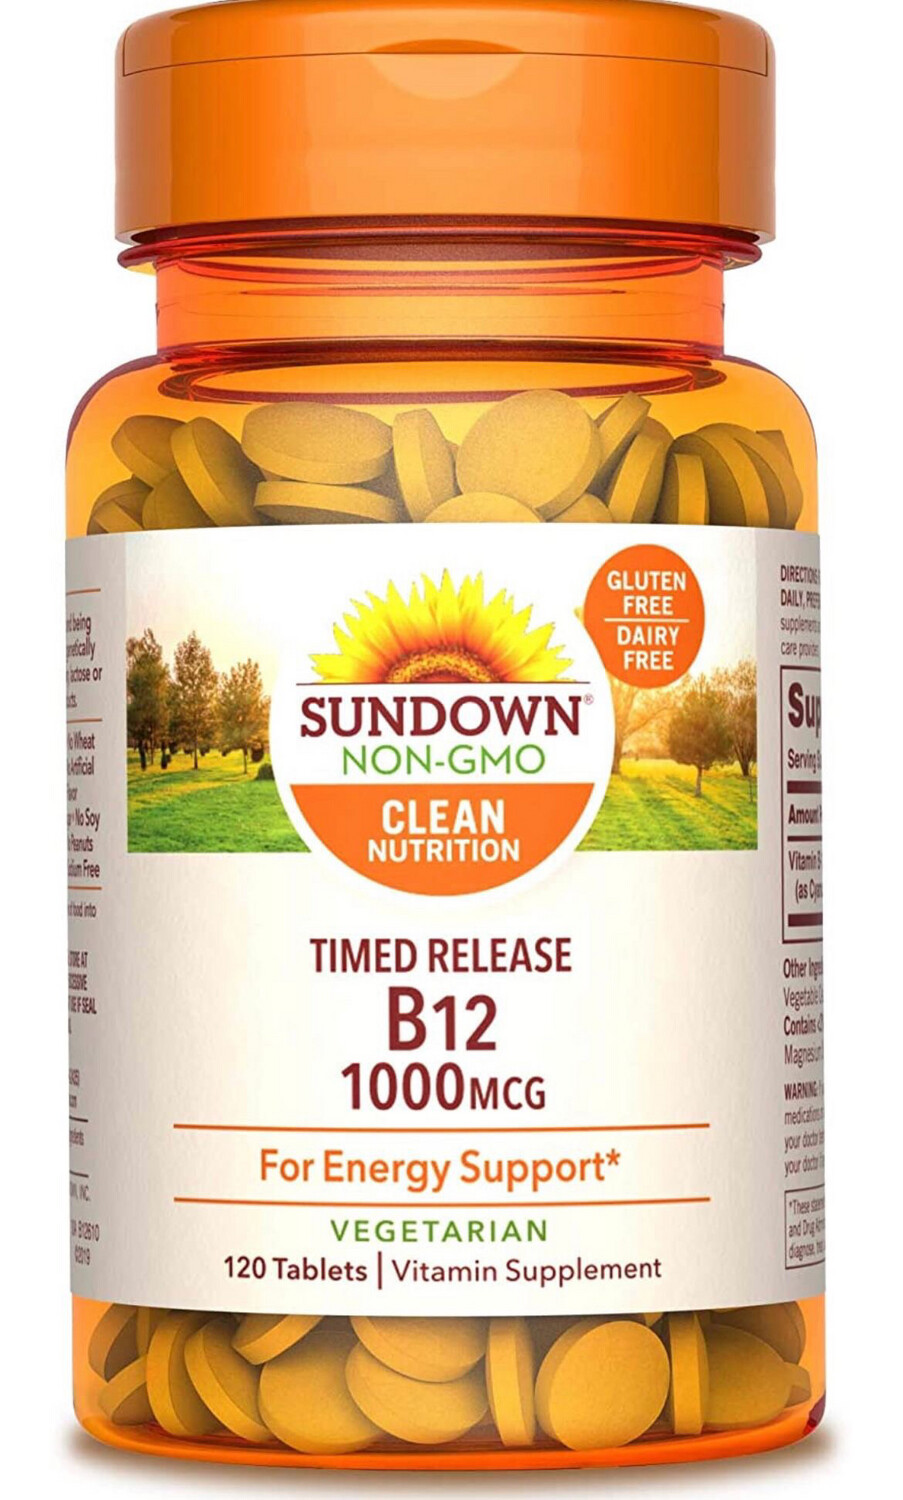 Vitamina B-12